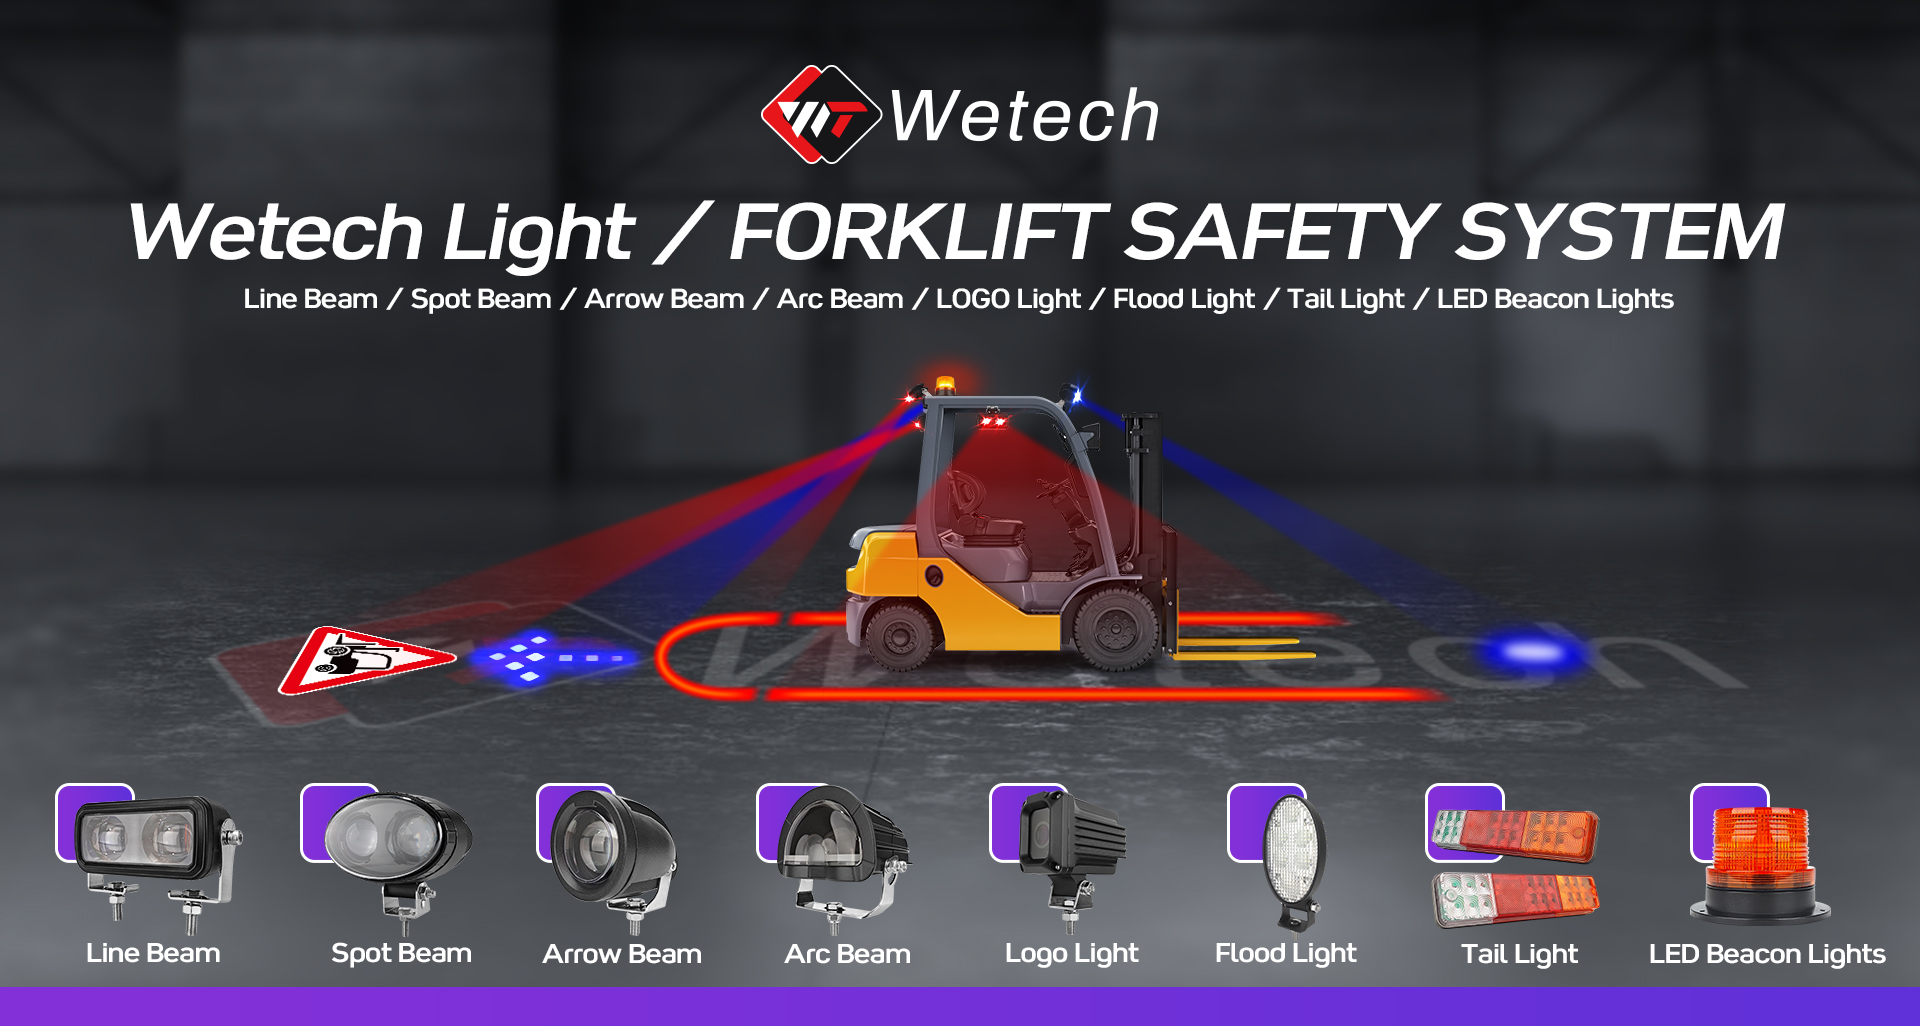 WETECH 10W Mini Spot Forklift Warning Lights LED safety Lamp